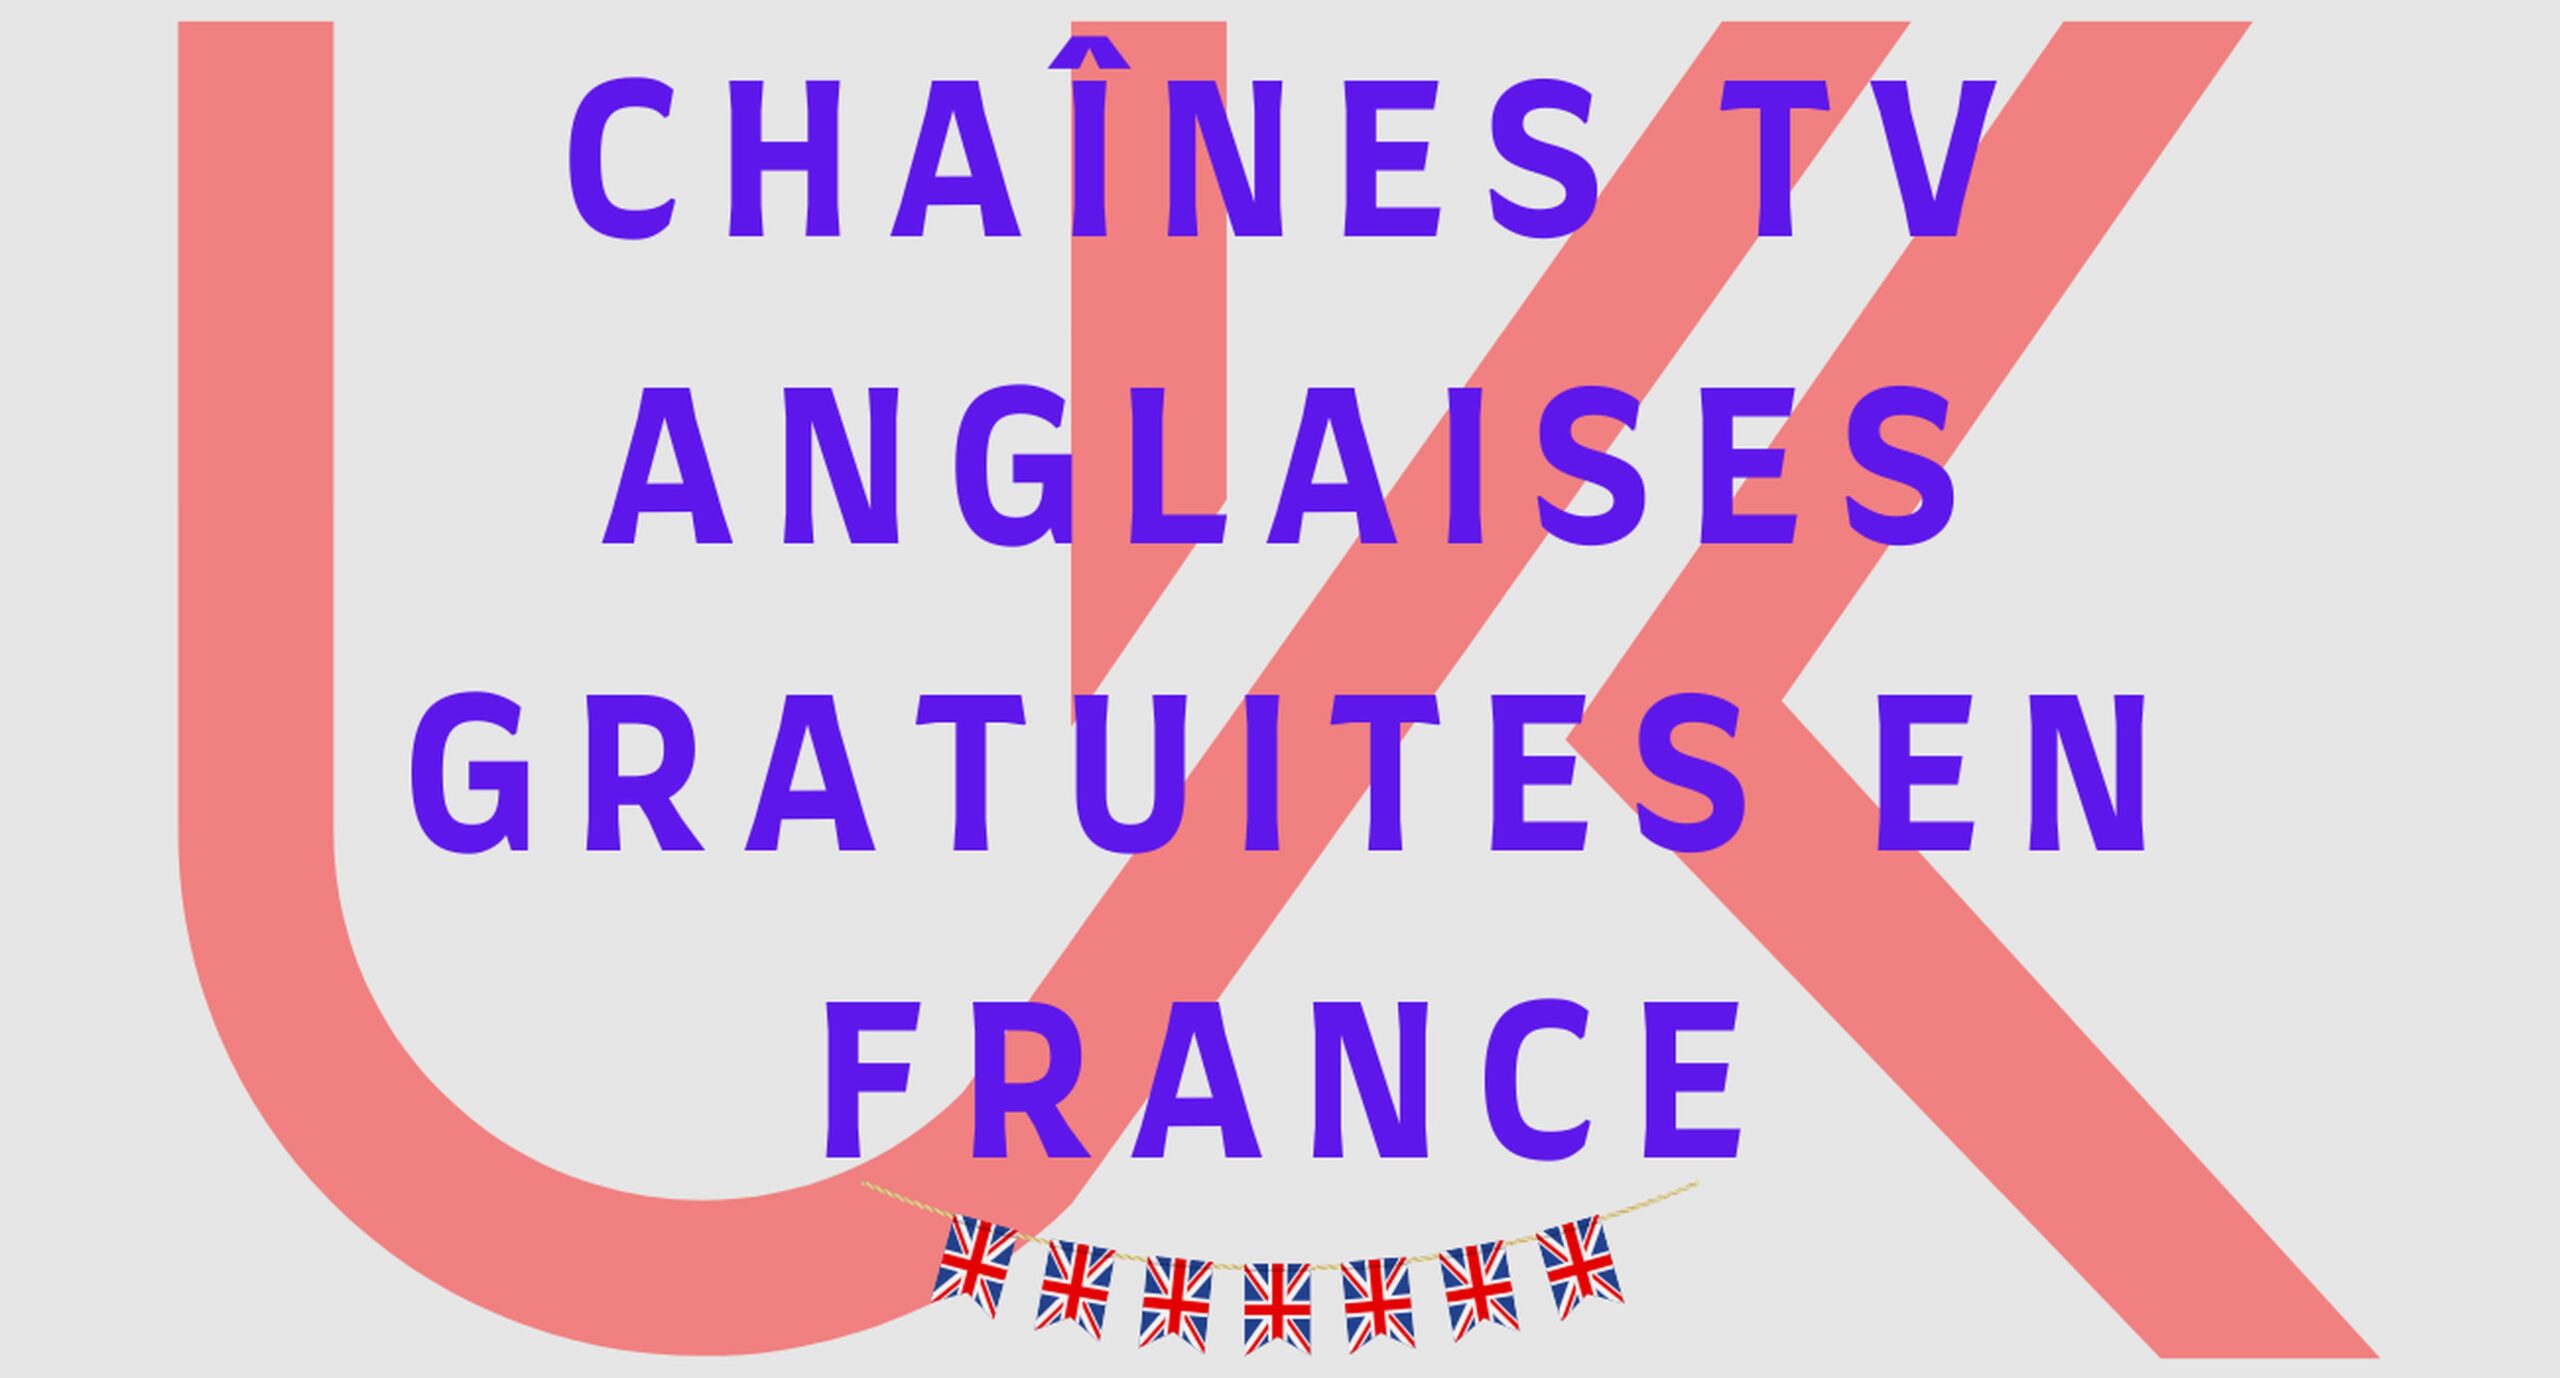 Chaînes TV Anglaises gratuites en France - 55 Chaînes TV disponibles 8